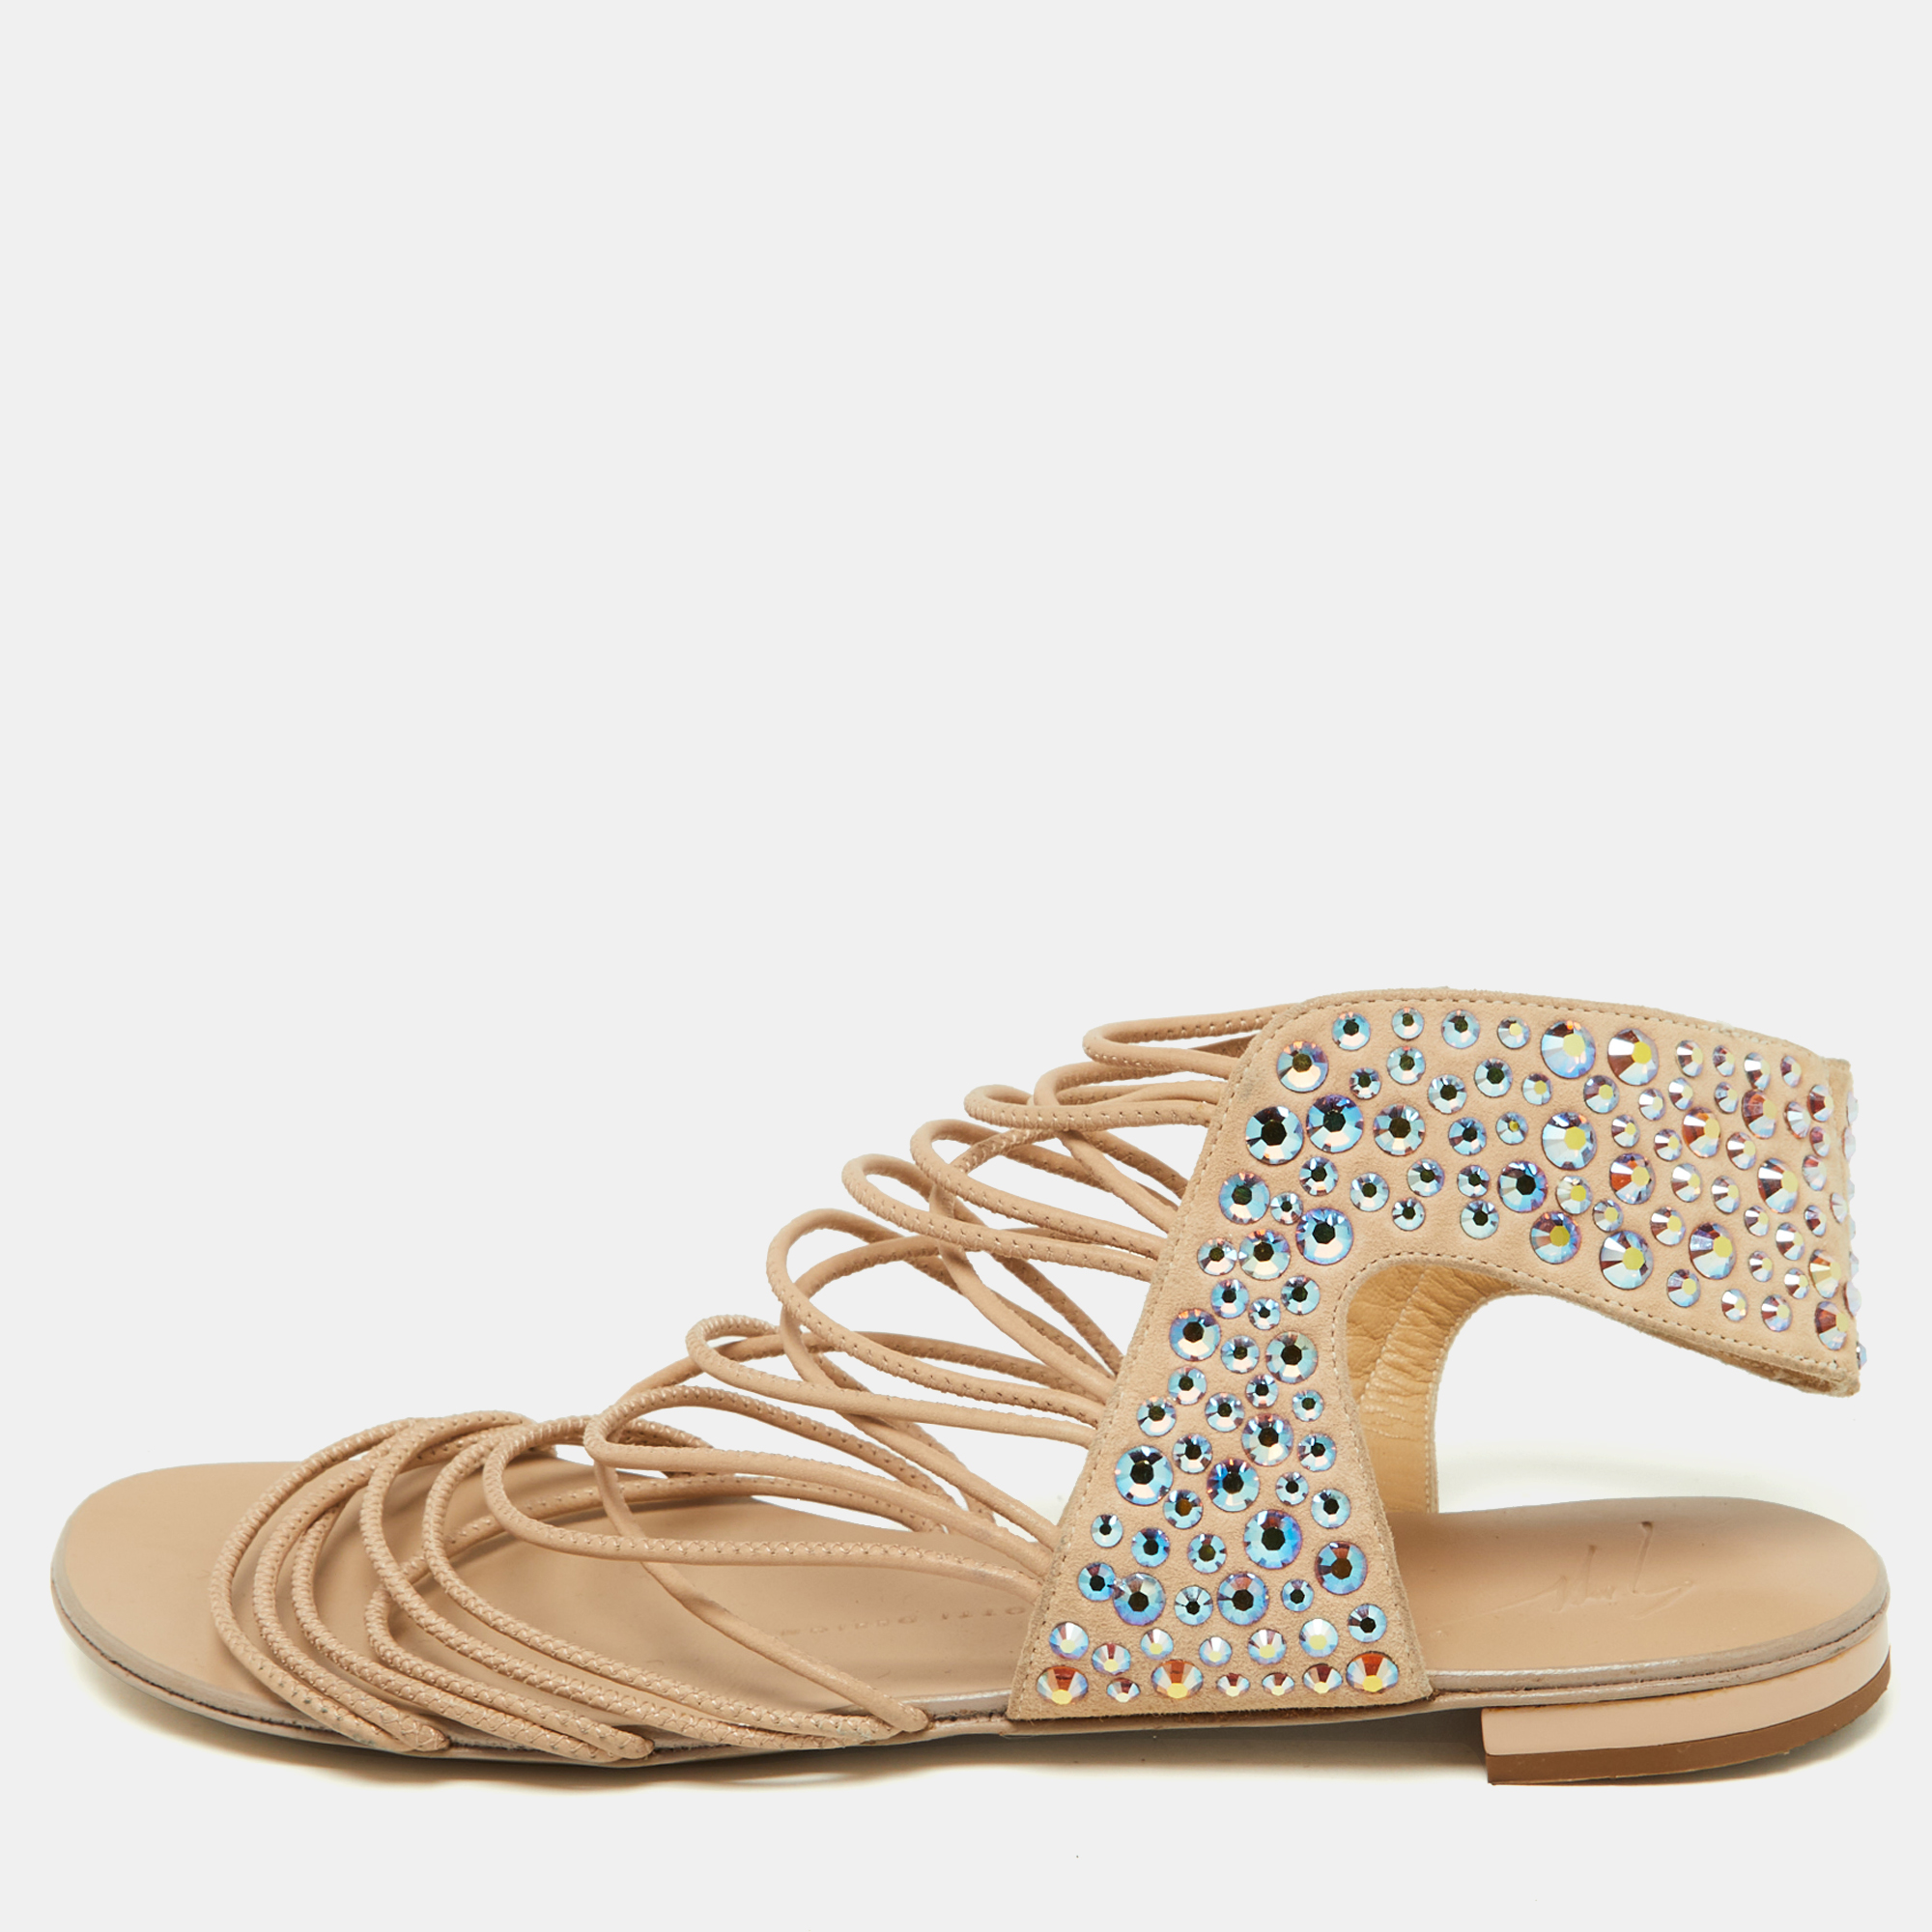 Giuseppe zanotti beige suede crystal embellished strappy flat sandals size 38.5